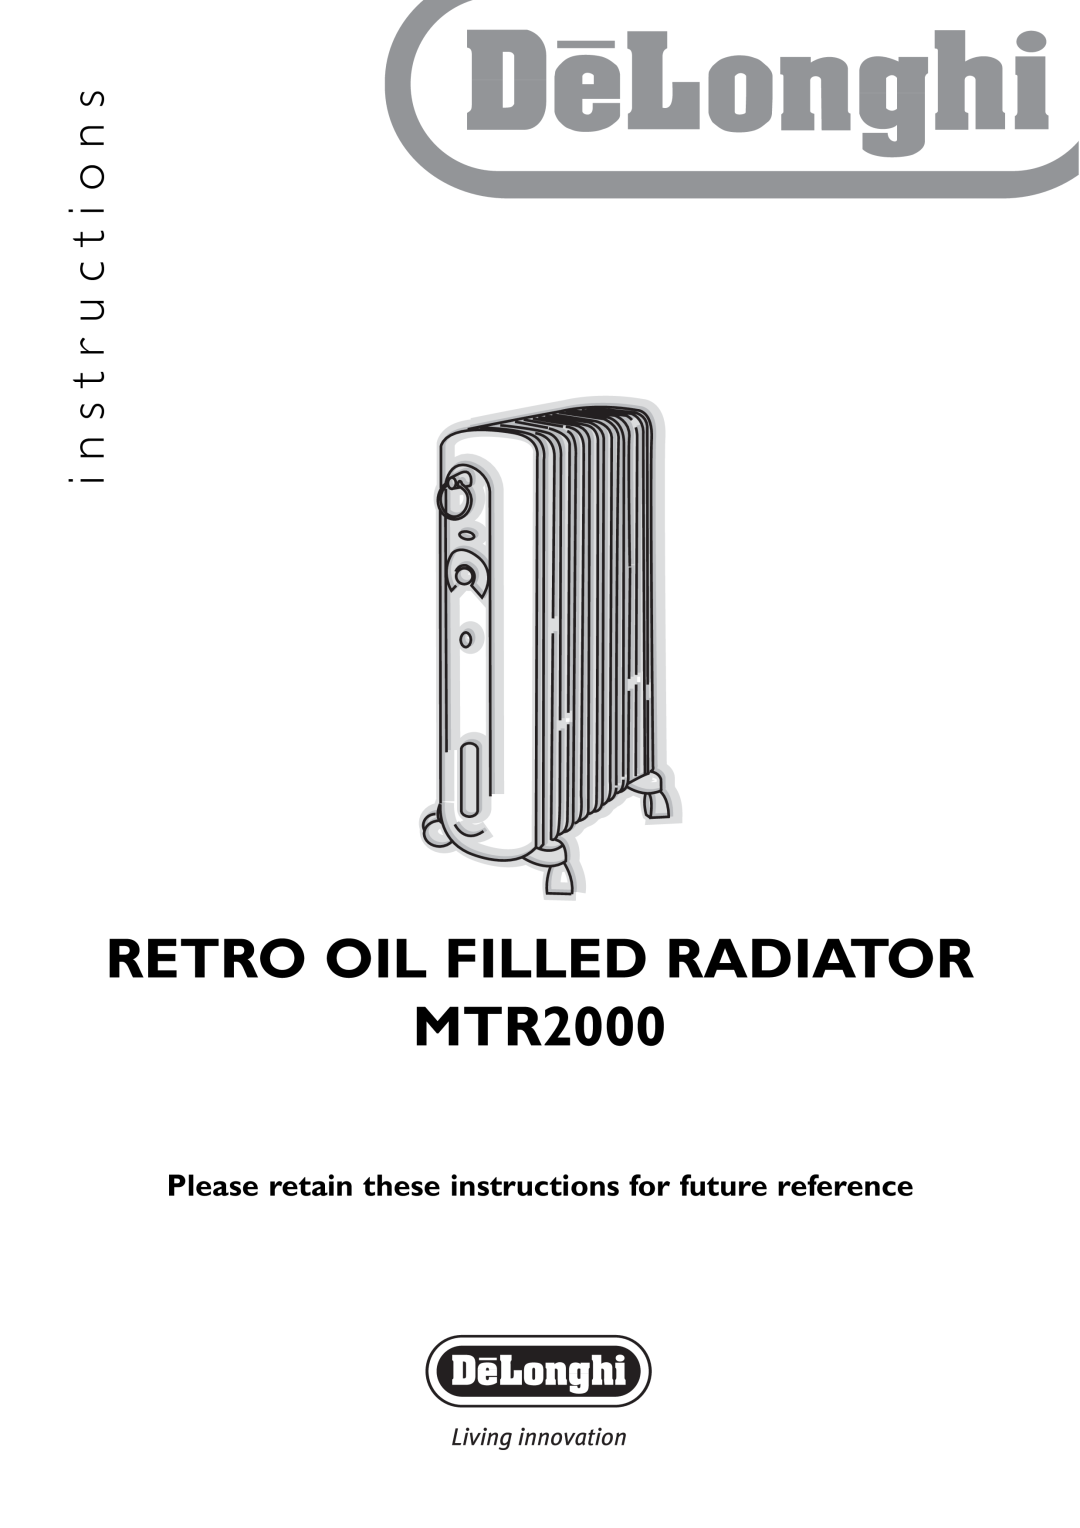 DeLonghi manual RETRO OIL FILLED RADIATOR MTR2000, i n s t r u c t i o n s 